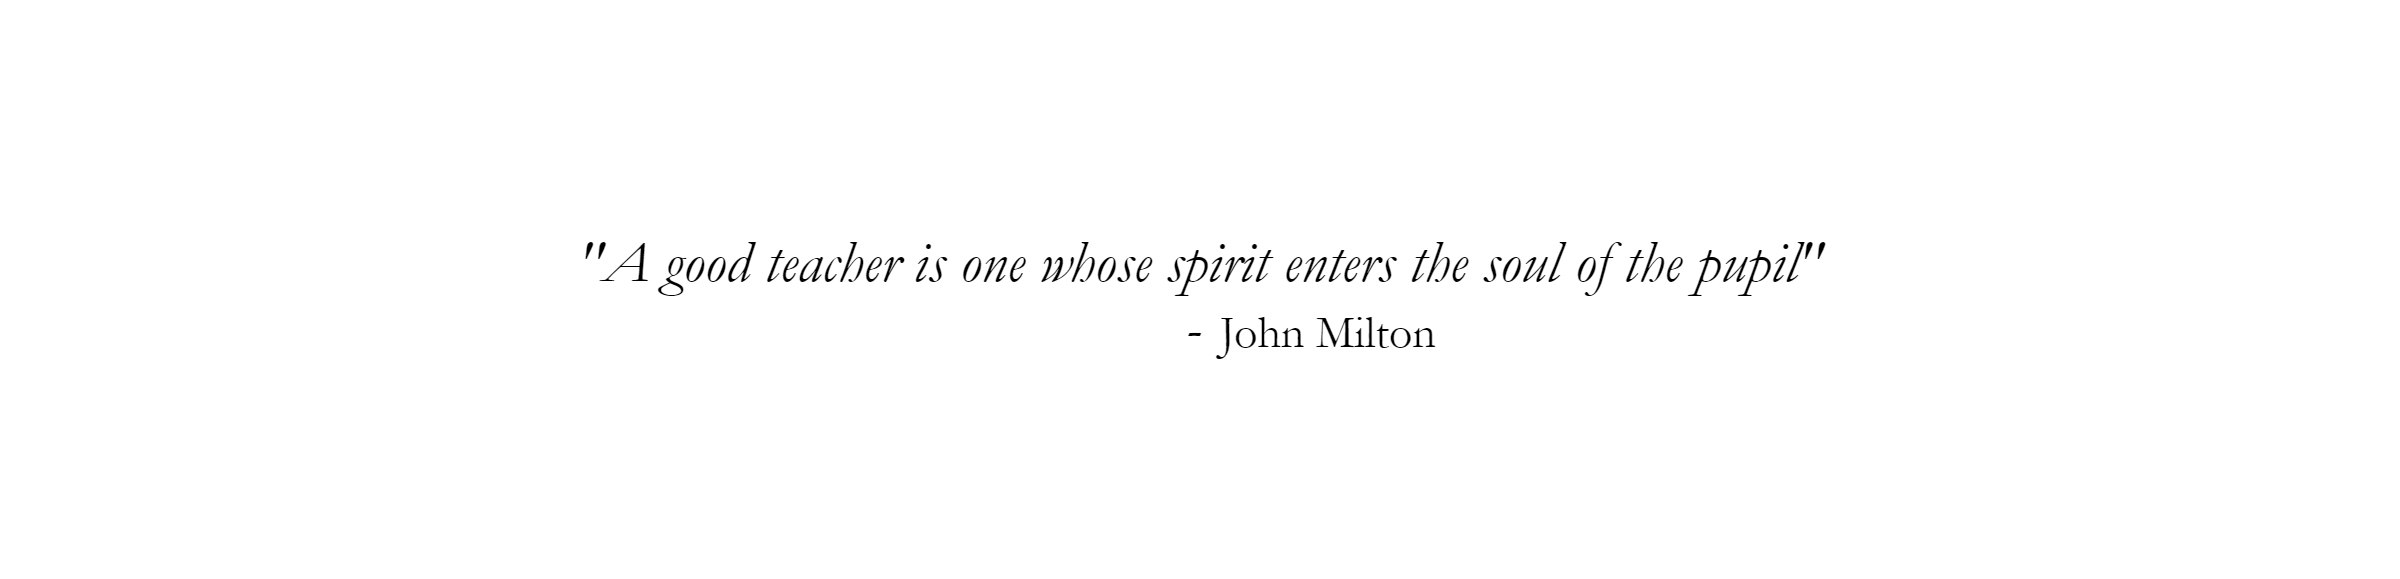 John Milton quote